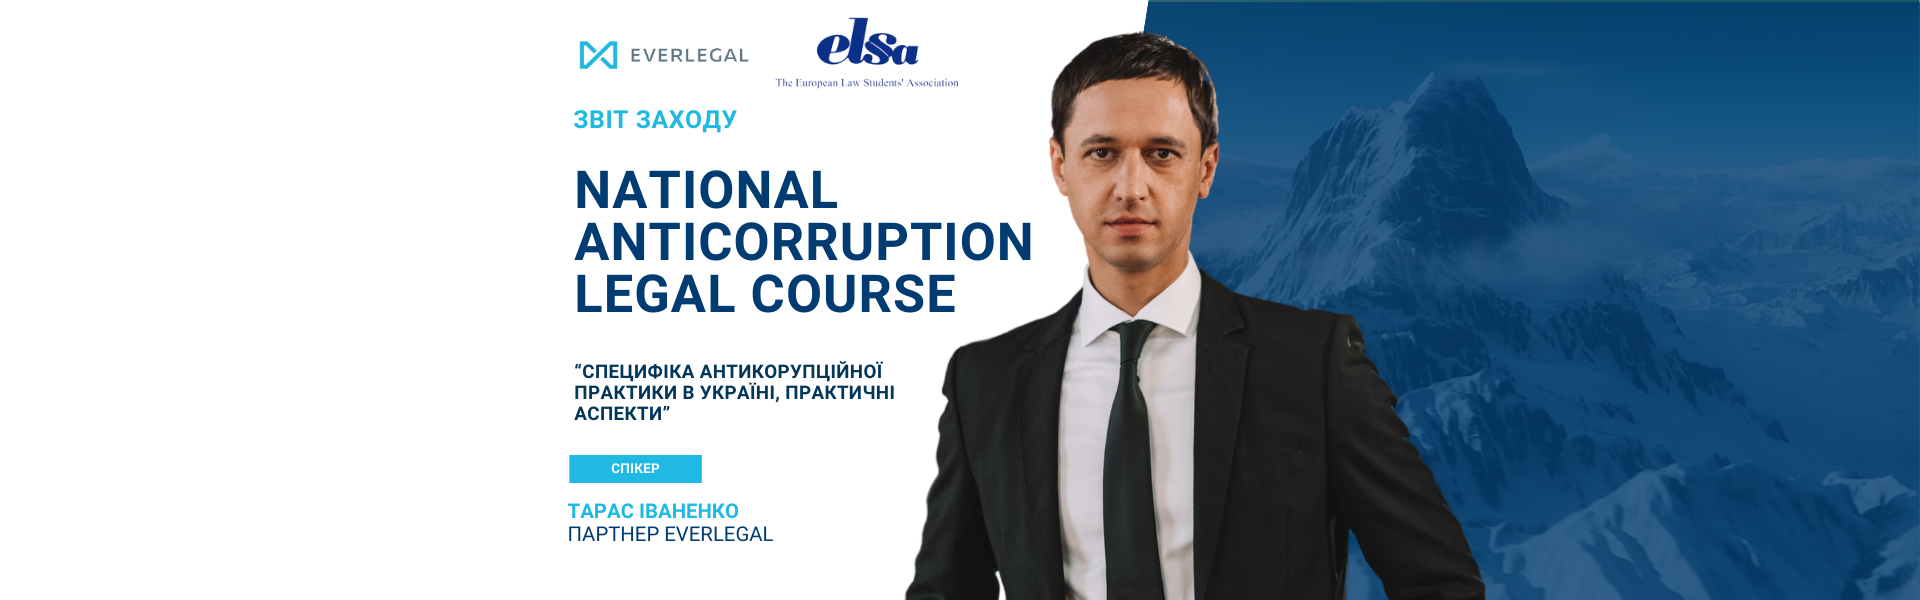 Партнер EVERLEGAL виступив спікером на National Anticorruption Legal Course